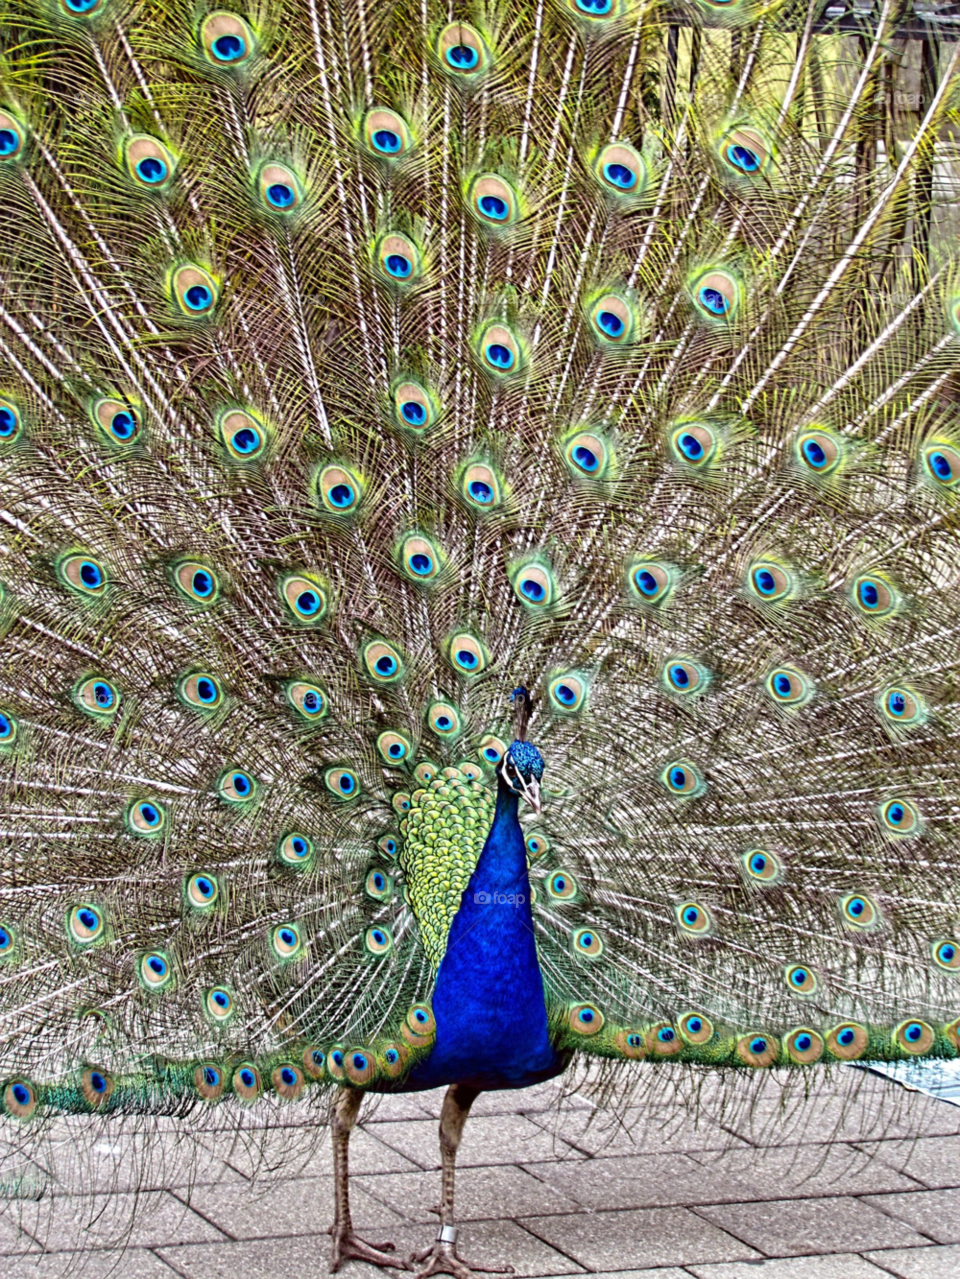 blue bird peacock fantail by landon